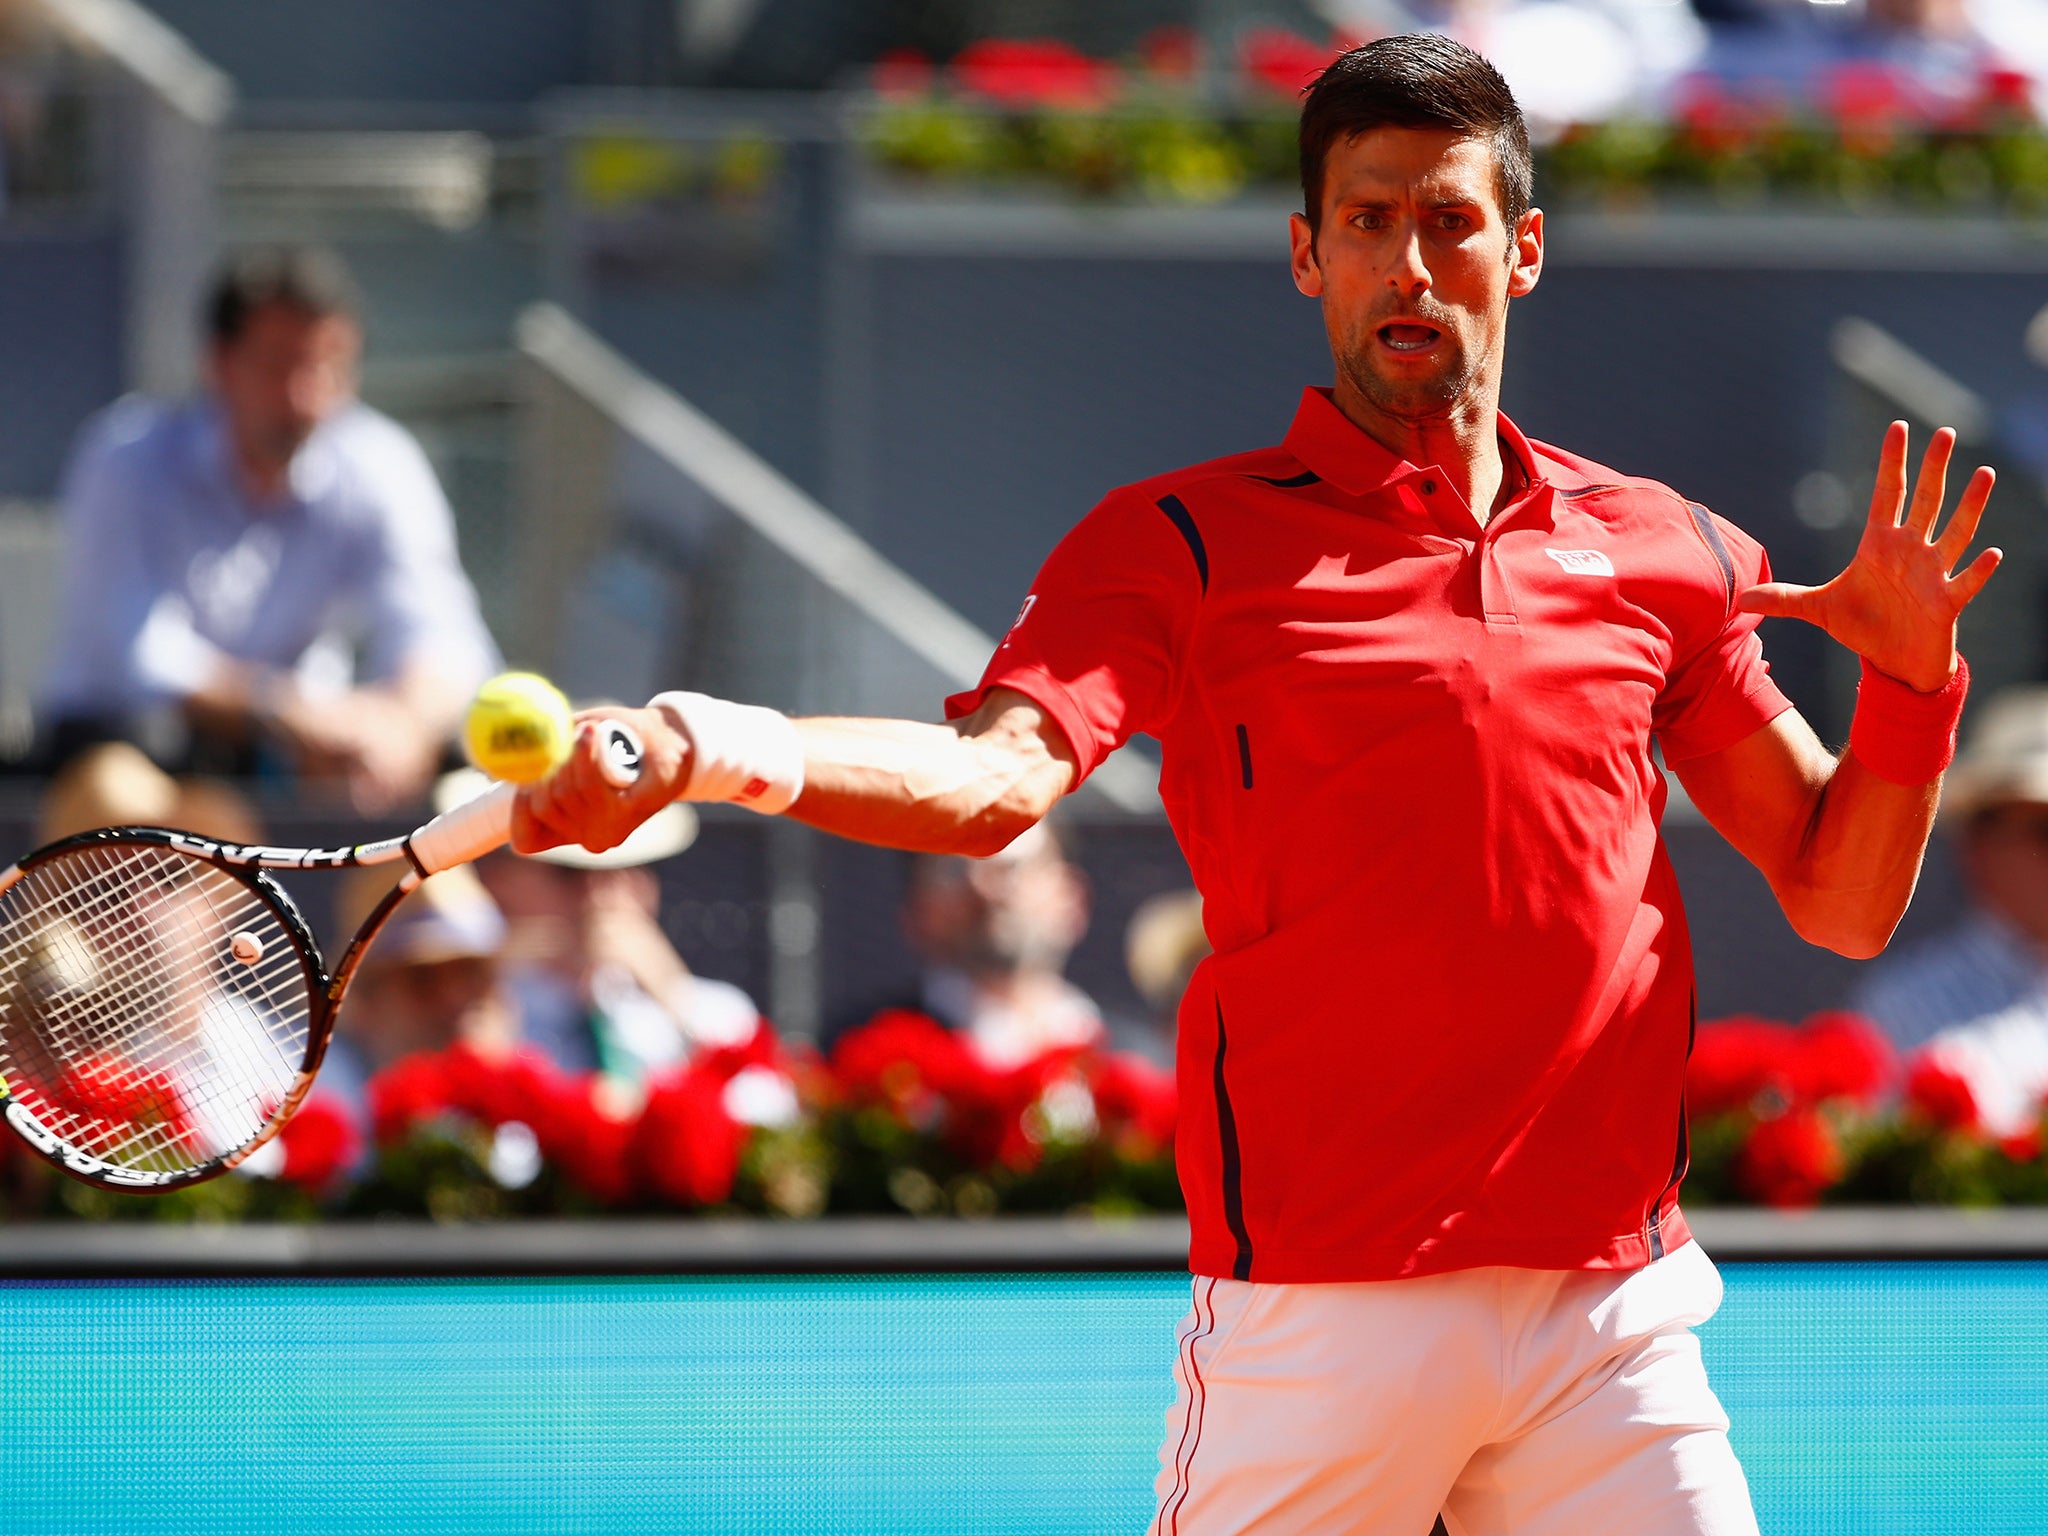 &#13;
Novak Djokovic plays a return&#13;